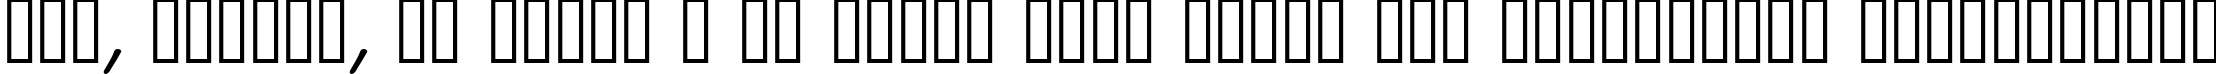 Пример написания шрифтом Manga Temple Italic текста на украинском